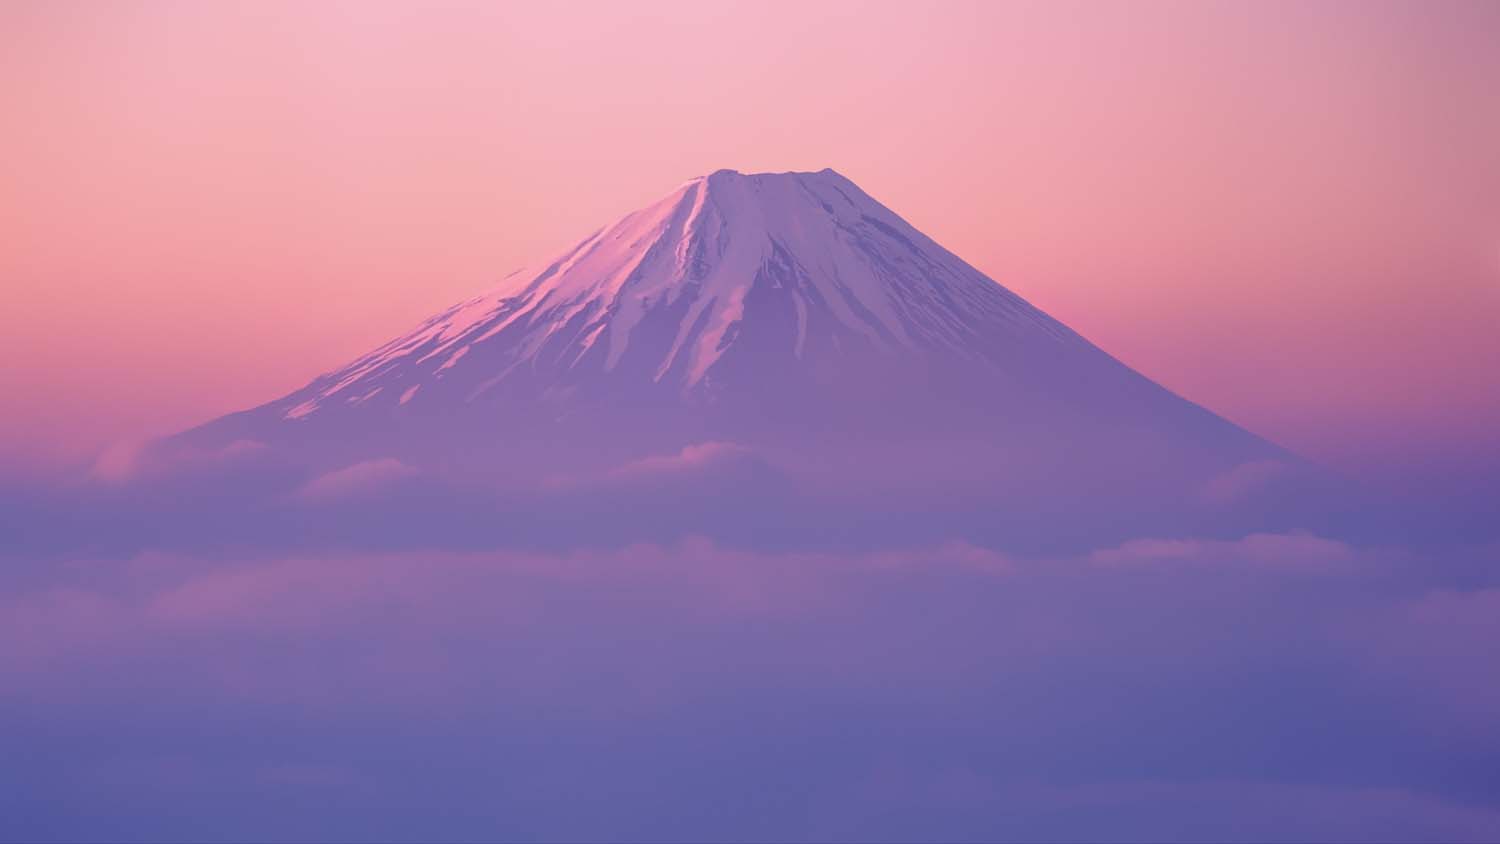 Mount Fuji, Mac OS X Lion